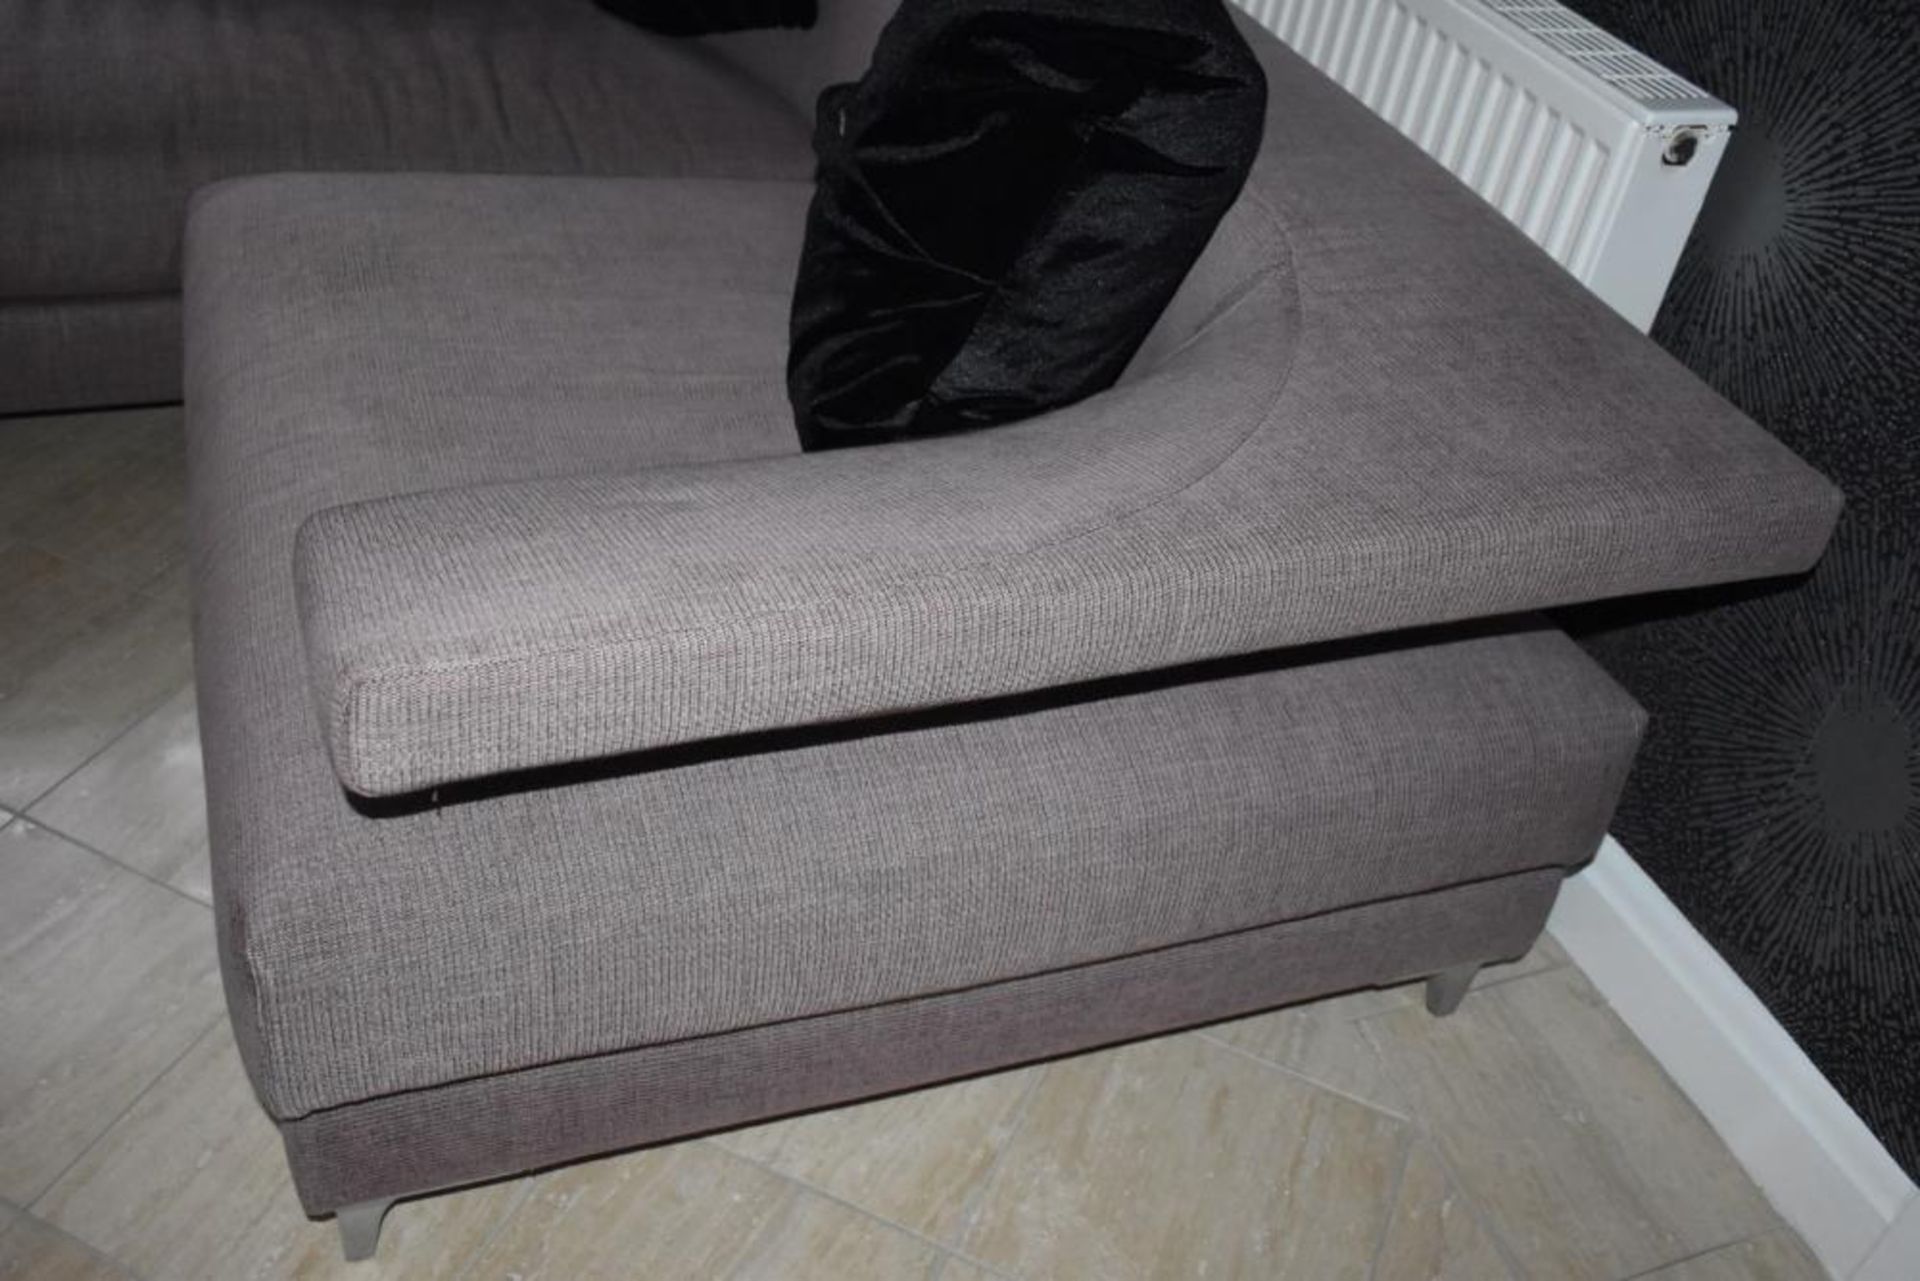 1 x SWAN Italia Corner Sofa and Ottoman finished in Light Purple - CL469 - Location: Prestwich M25 - - Image 13 of 14